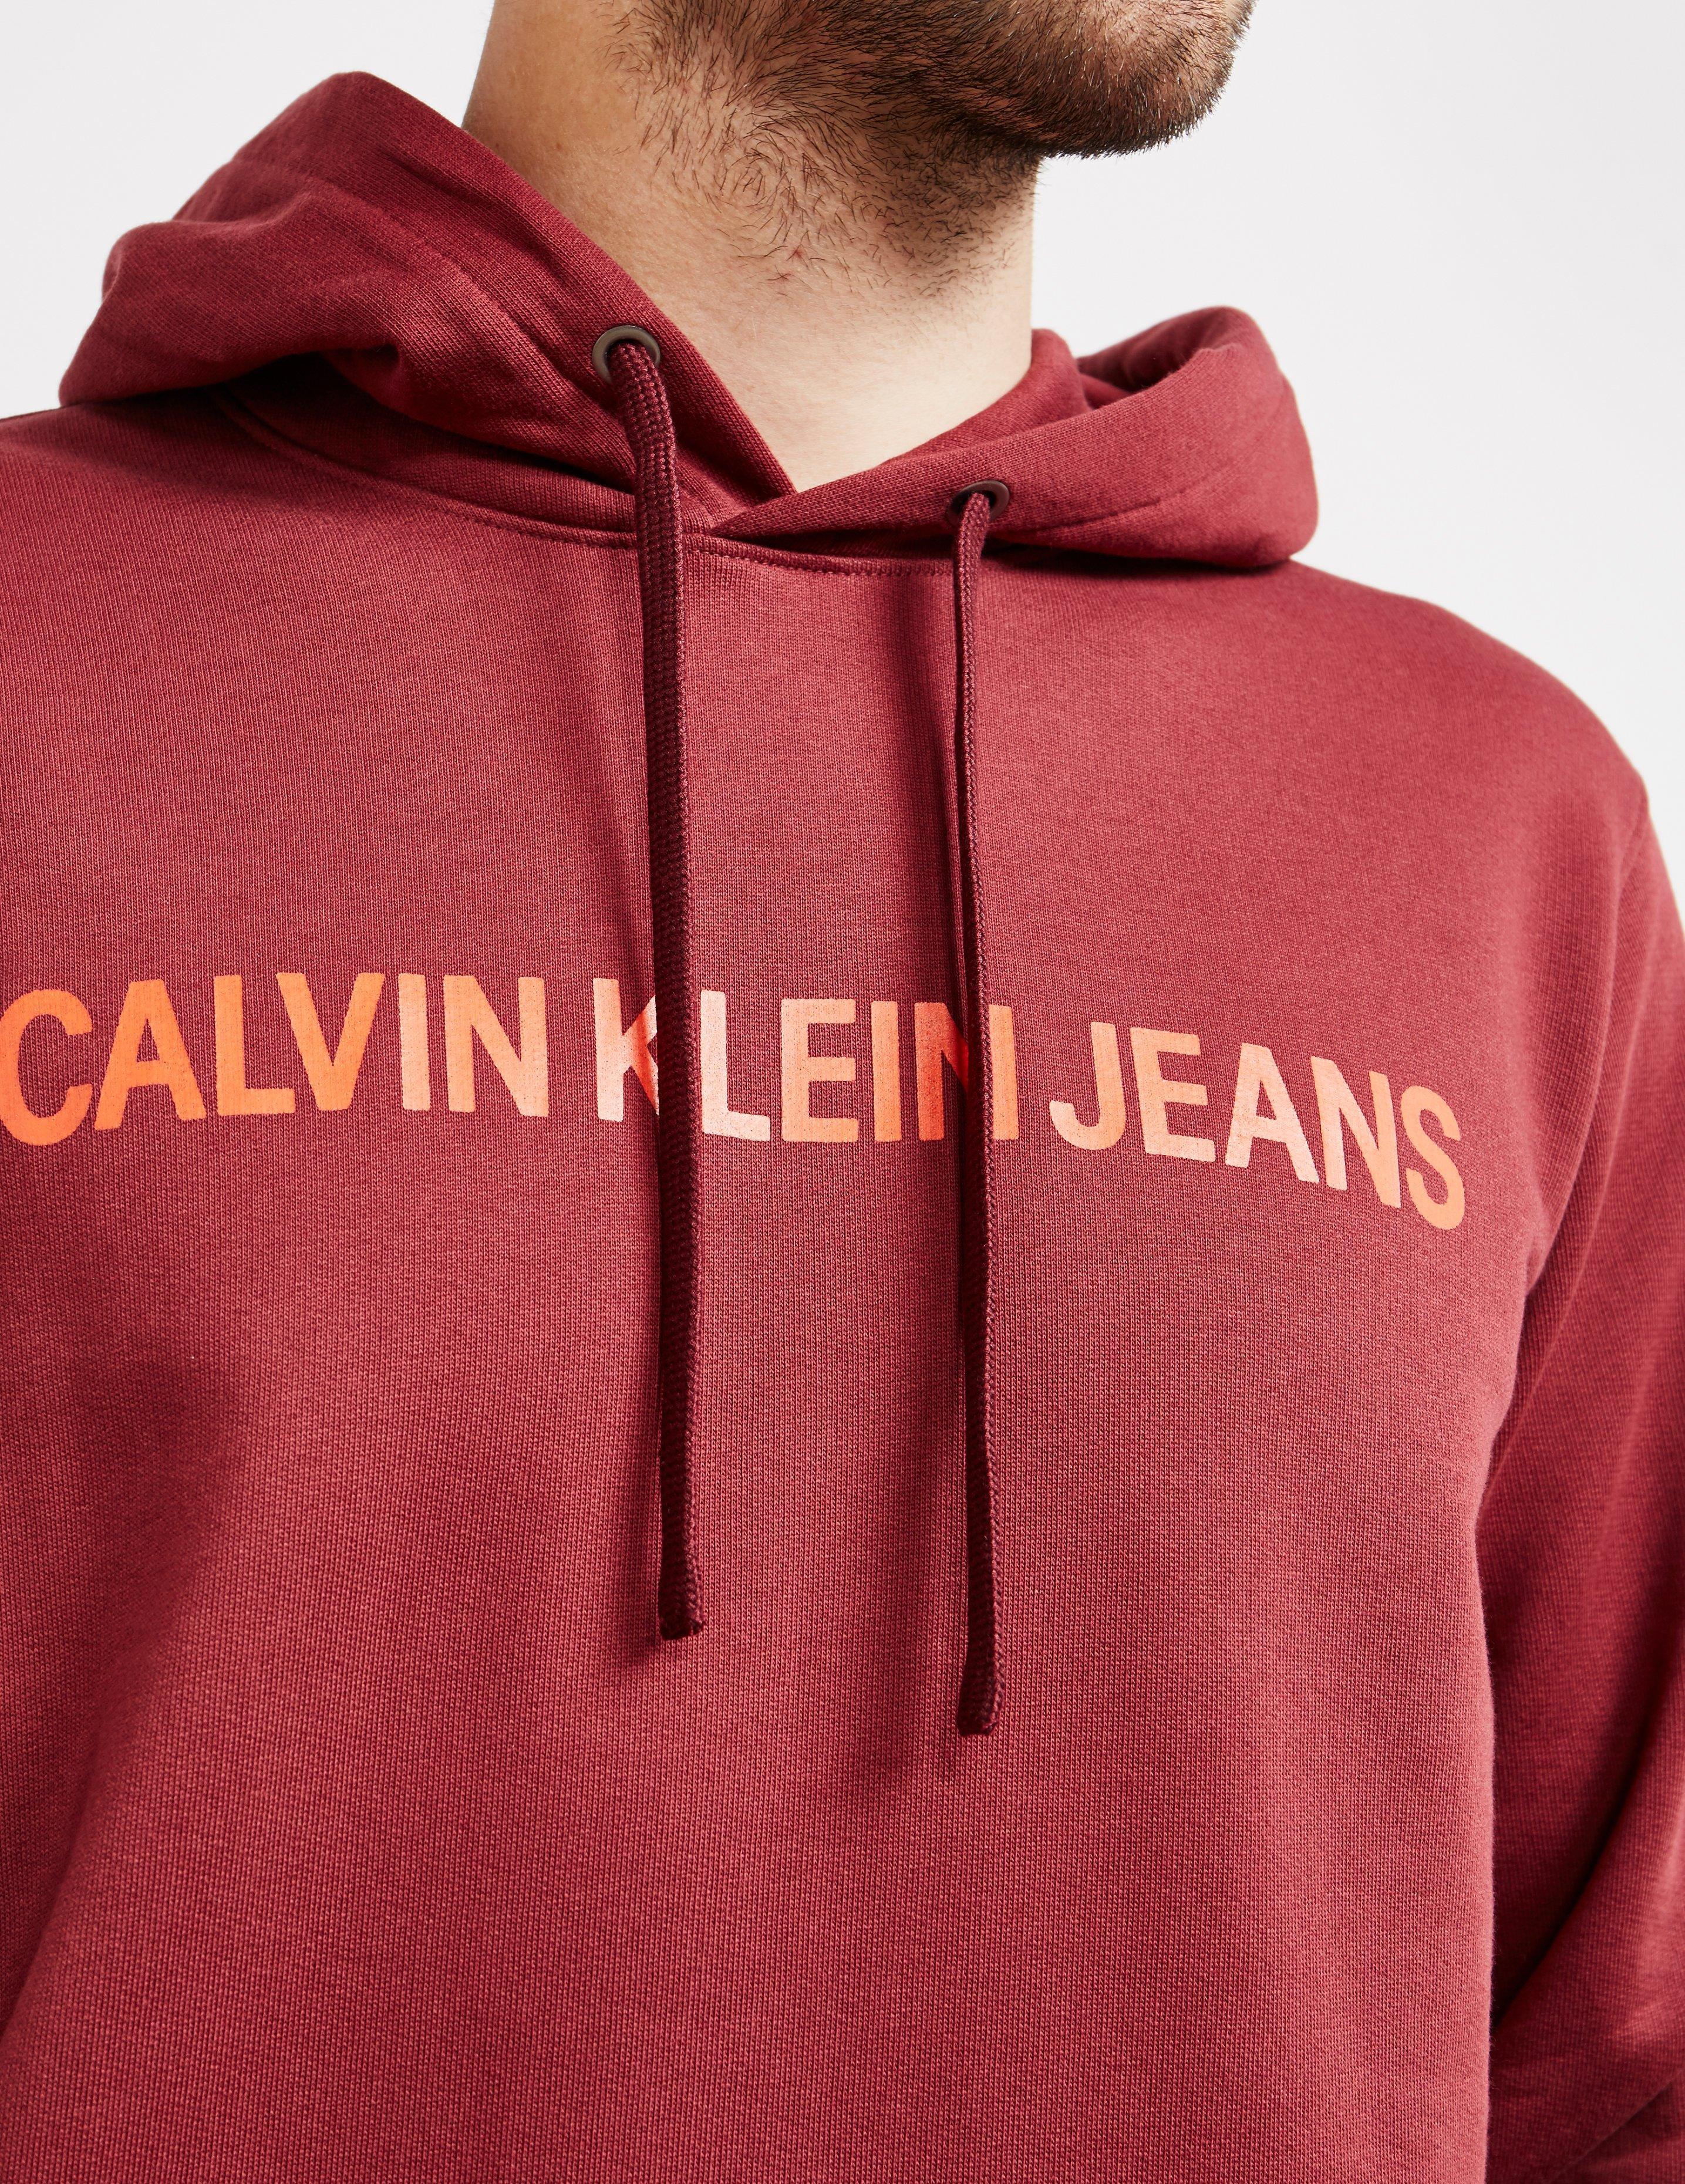 Calvin Klein Cotton Institutional Overhead Hoodie Burgundy/burgundy in Red  for Men - Lyst